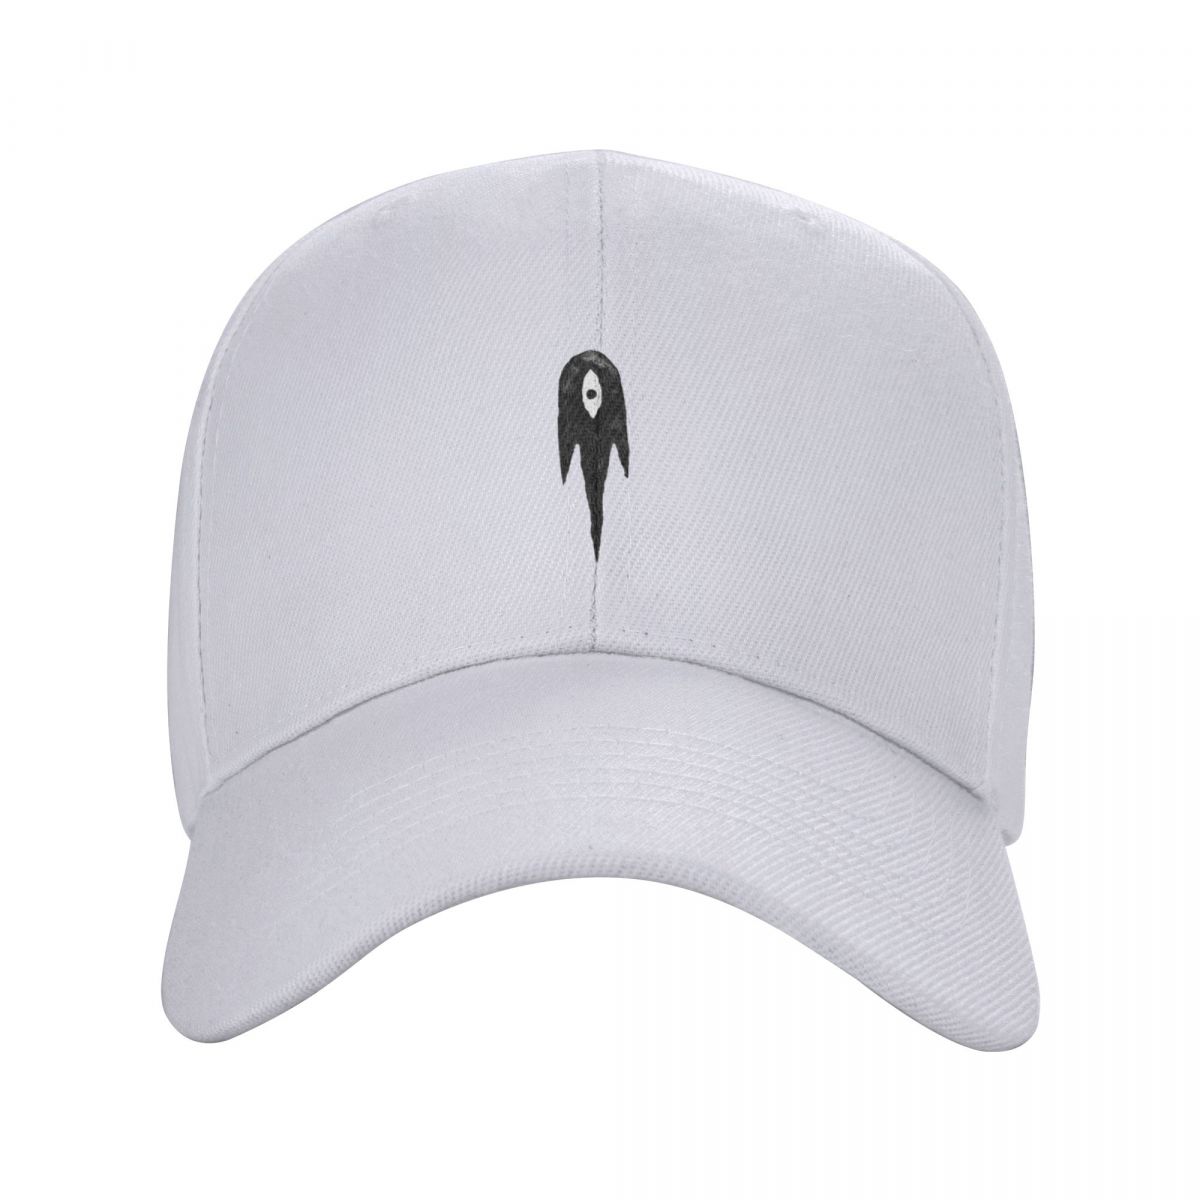 Omori Something Omori Game Omori Cap baseball cap Golf wear new in hat Caps women Men 1 - Omori Plush